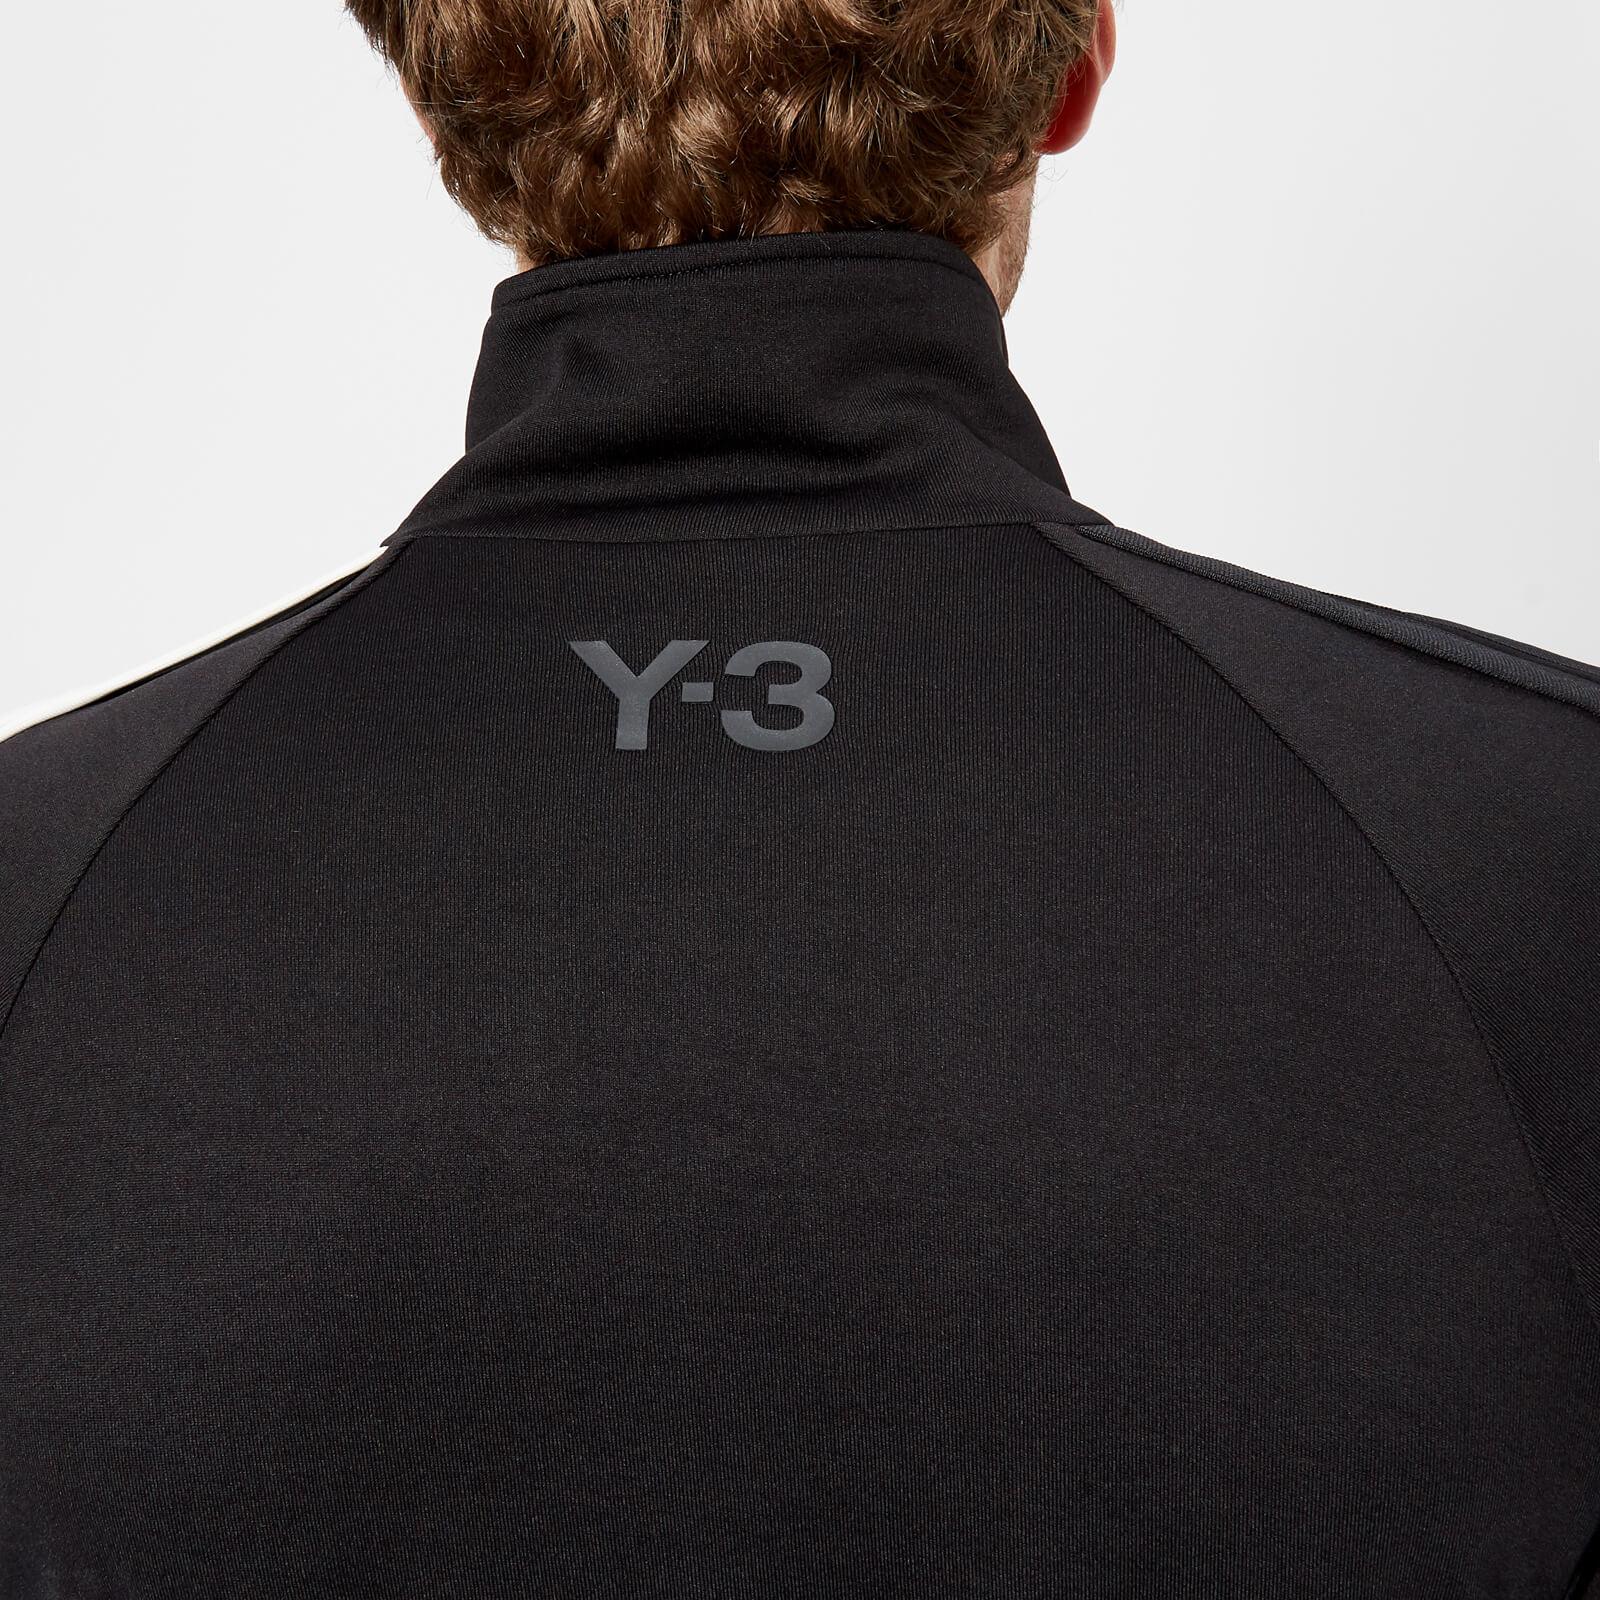 Y-3 Cotton 3 Stripe Track Jacket in Black for Men | Lyst